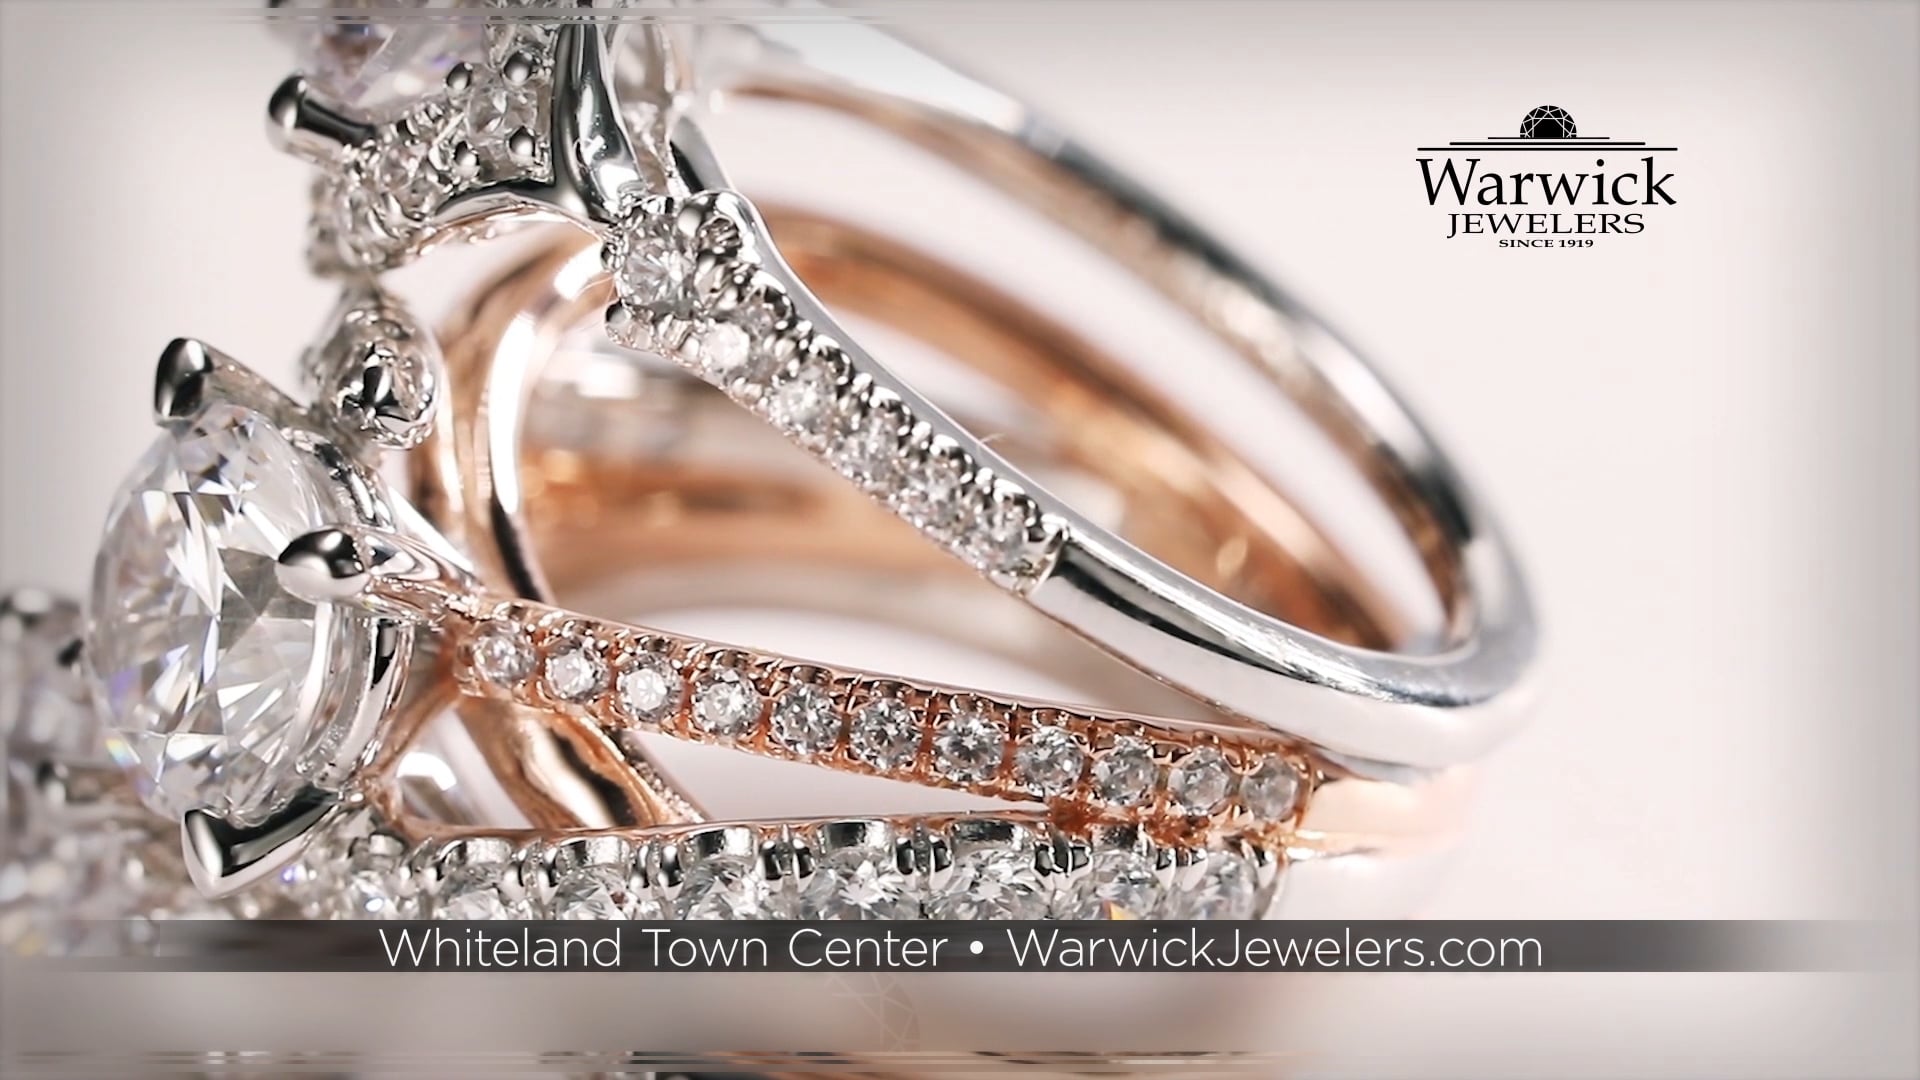 Warwick Jewelers